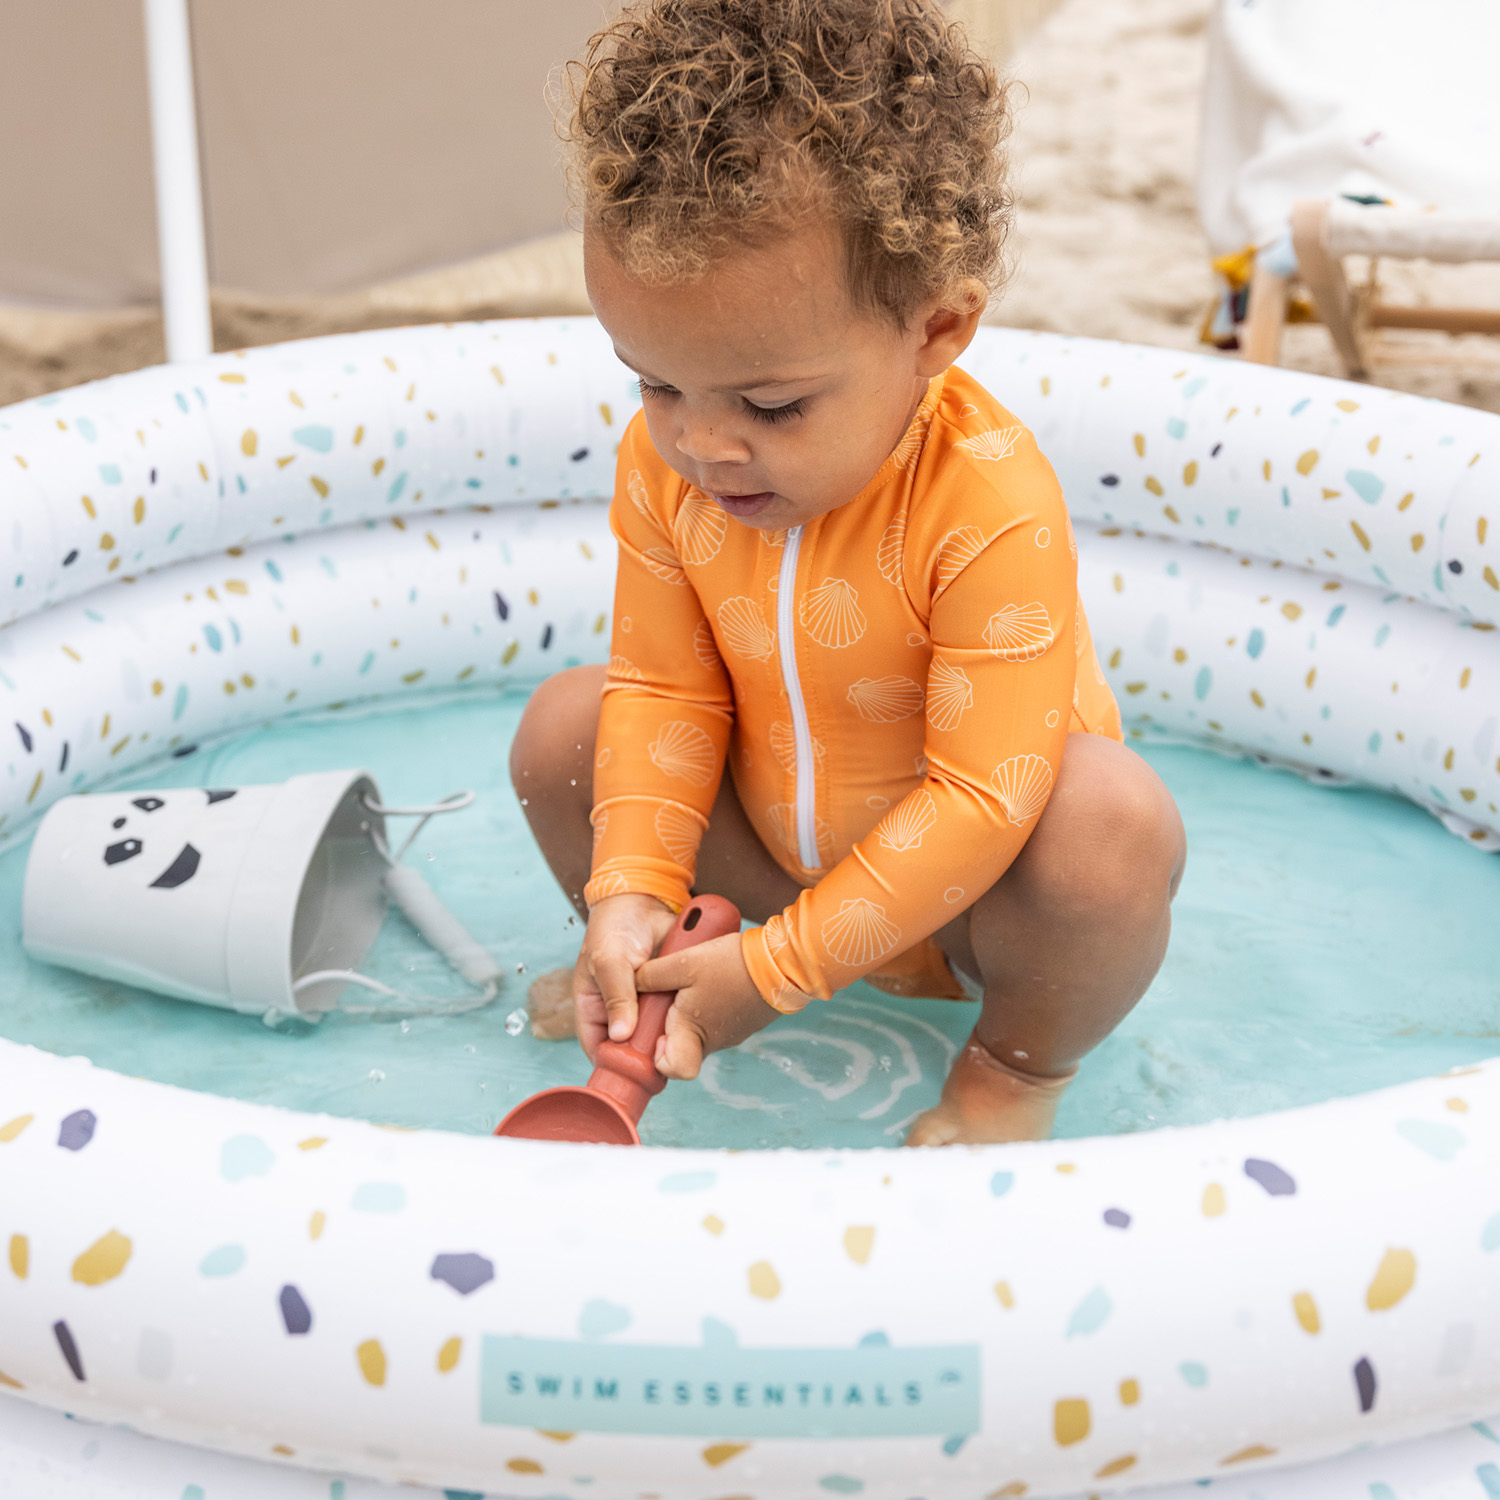 Swim Essentials | Baby Pool 100cm | White Terrazzo